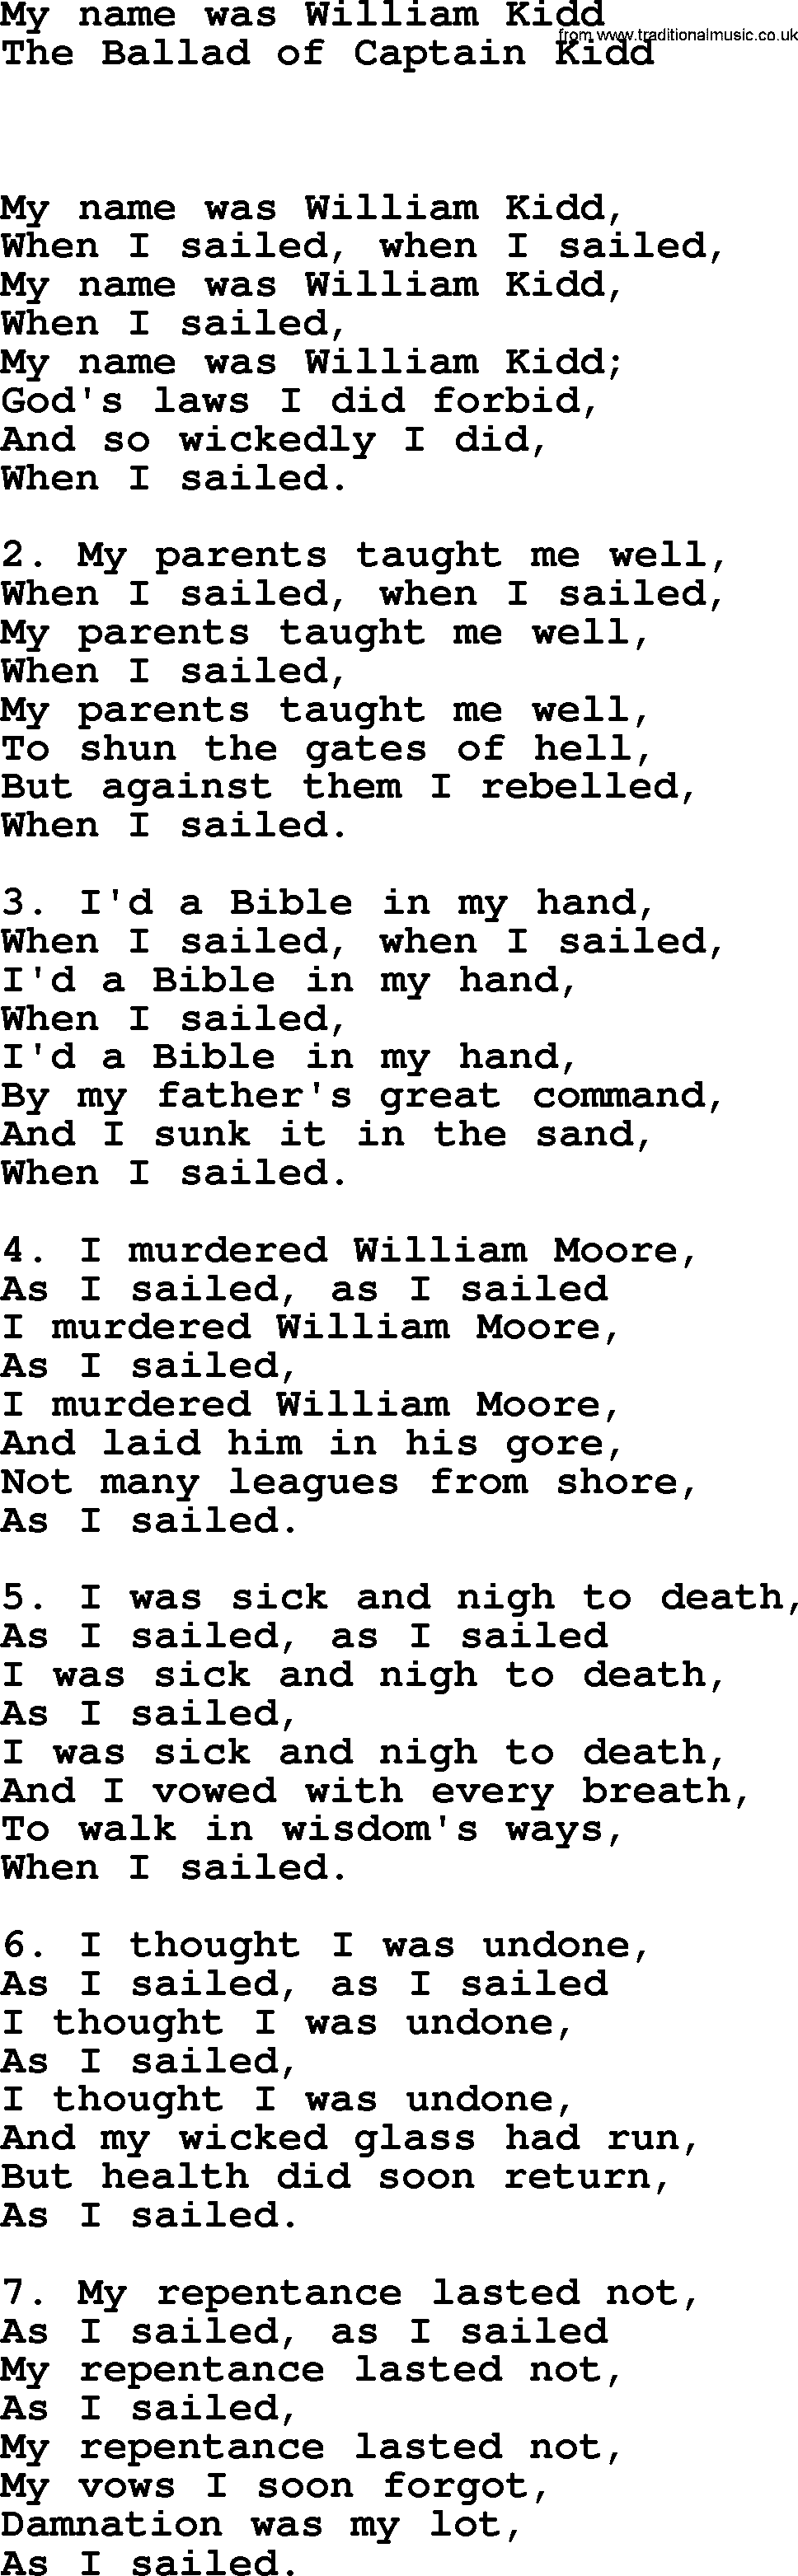 Sea Song or Shantie: My Name Was William Kidd, lyrics